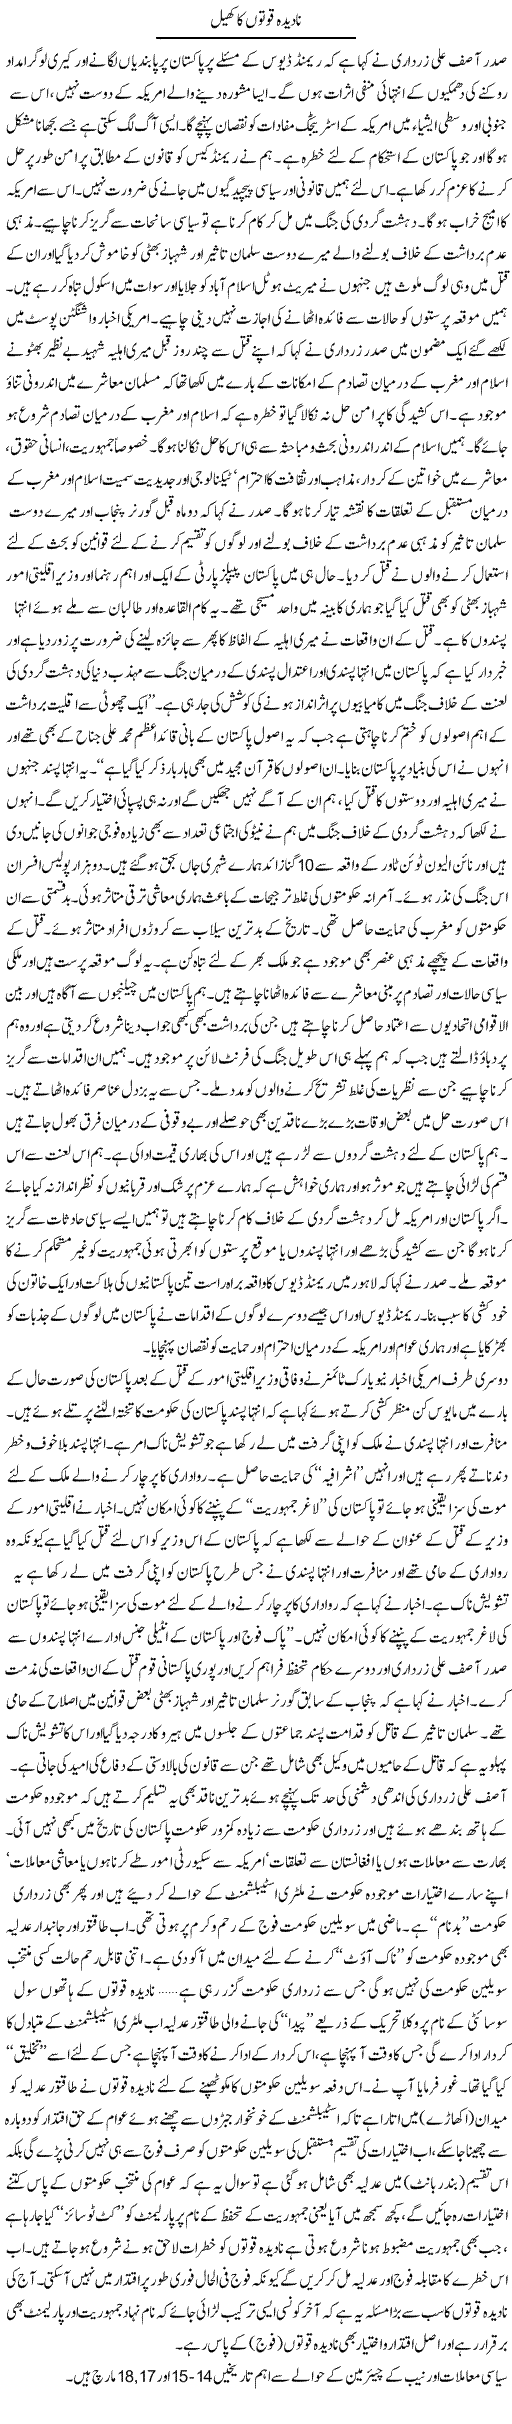 Raymond Davis and Salman Taseer Express Column Zamrad Naqvi 14 March 2011